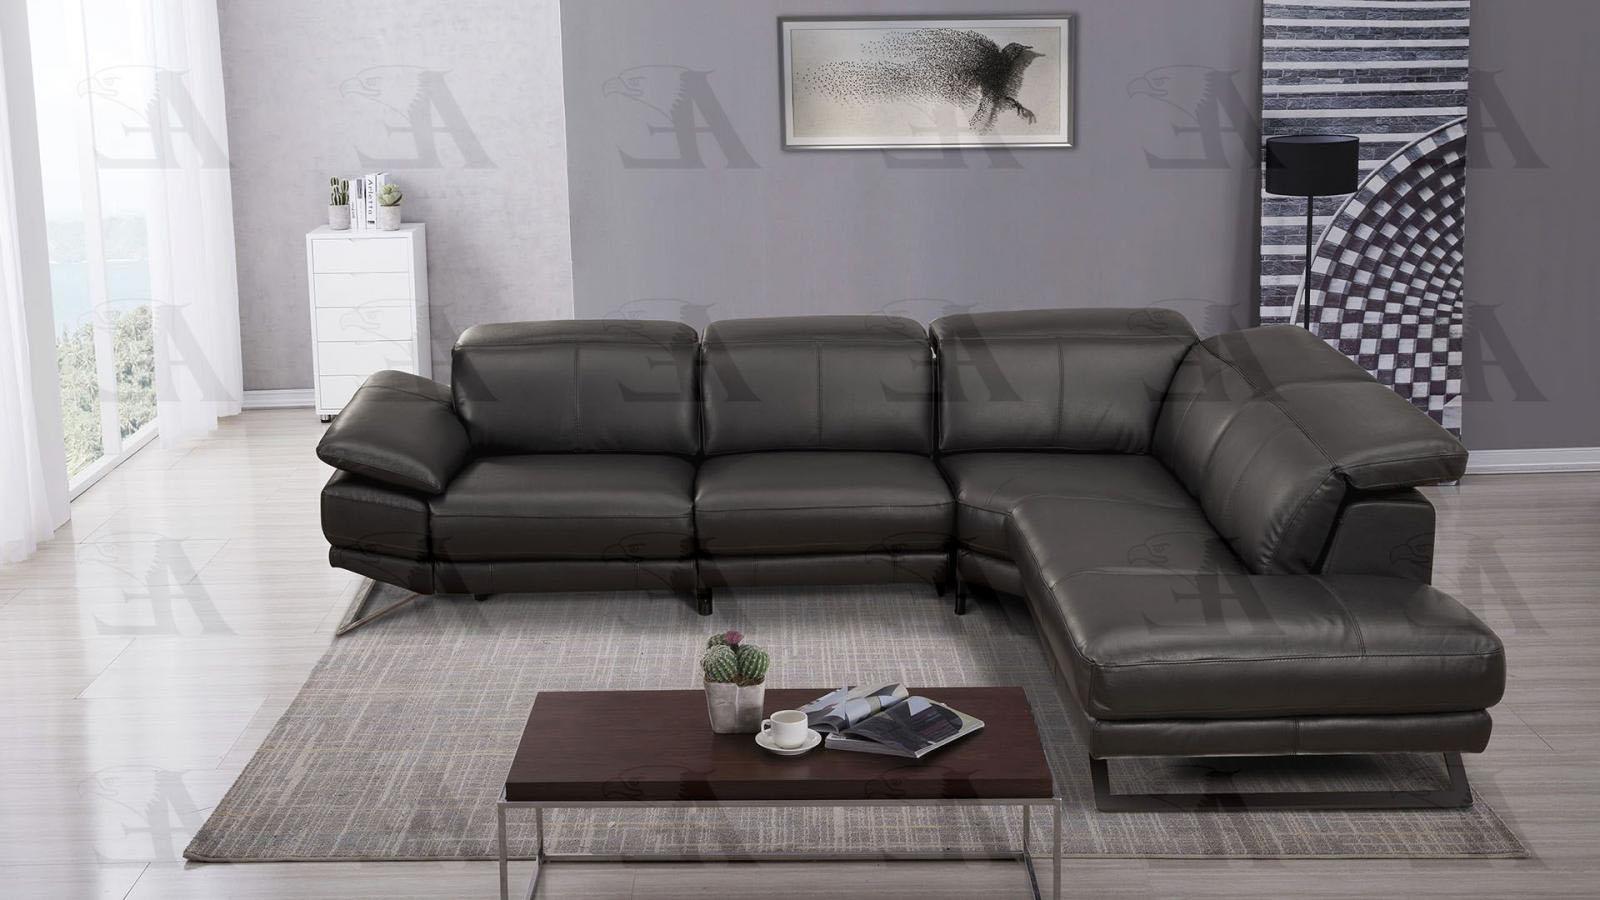 

    
American Eagle Furniture EK-LH197L-BK Reclining Sectional Black EK-LH197L-BK
